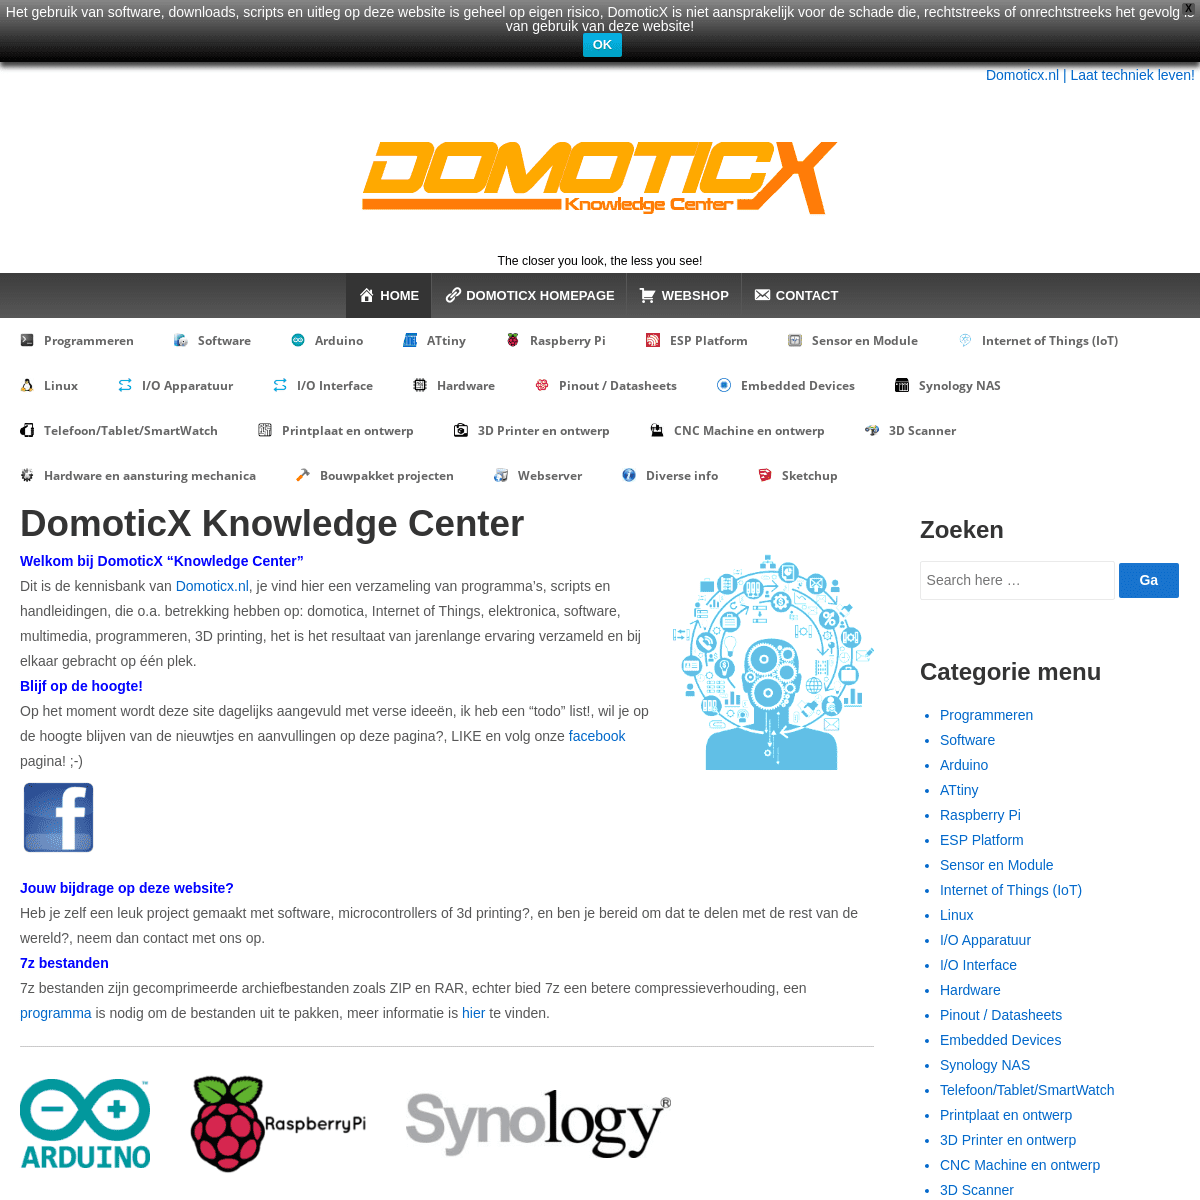 A complete backup of domoticx.com